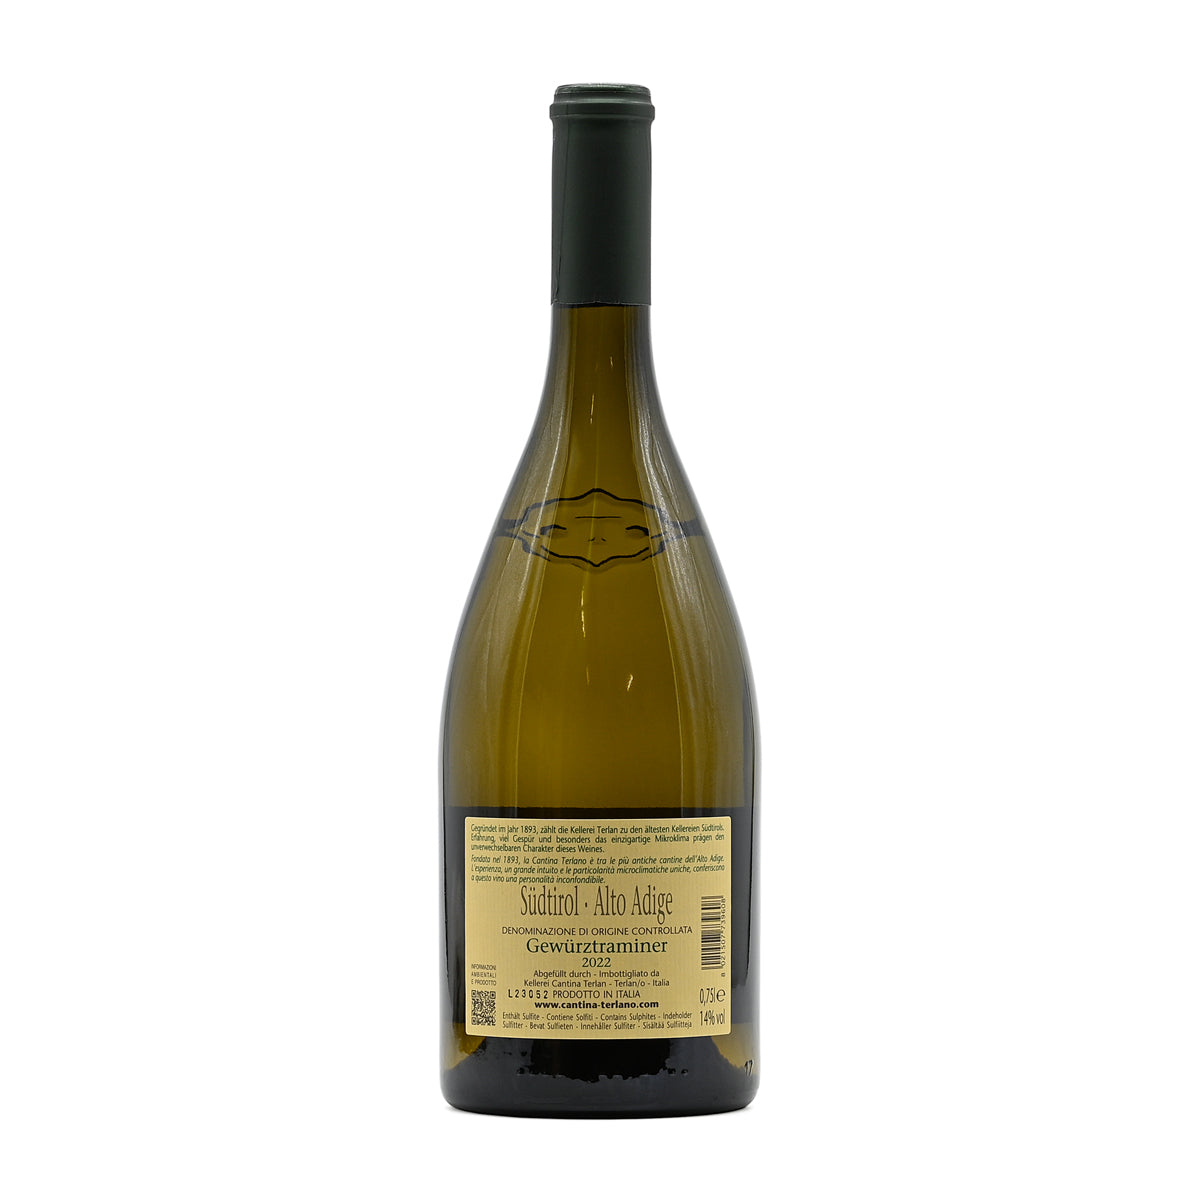 Terlano Gewurztraminer 2022, 750ml Italian white wine, made from Gewurztraminer, from Alto Adige DOC, Trentino-Alto Adige, Italy – GDV Fine Wines, Hong Kong